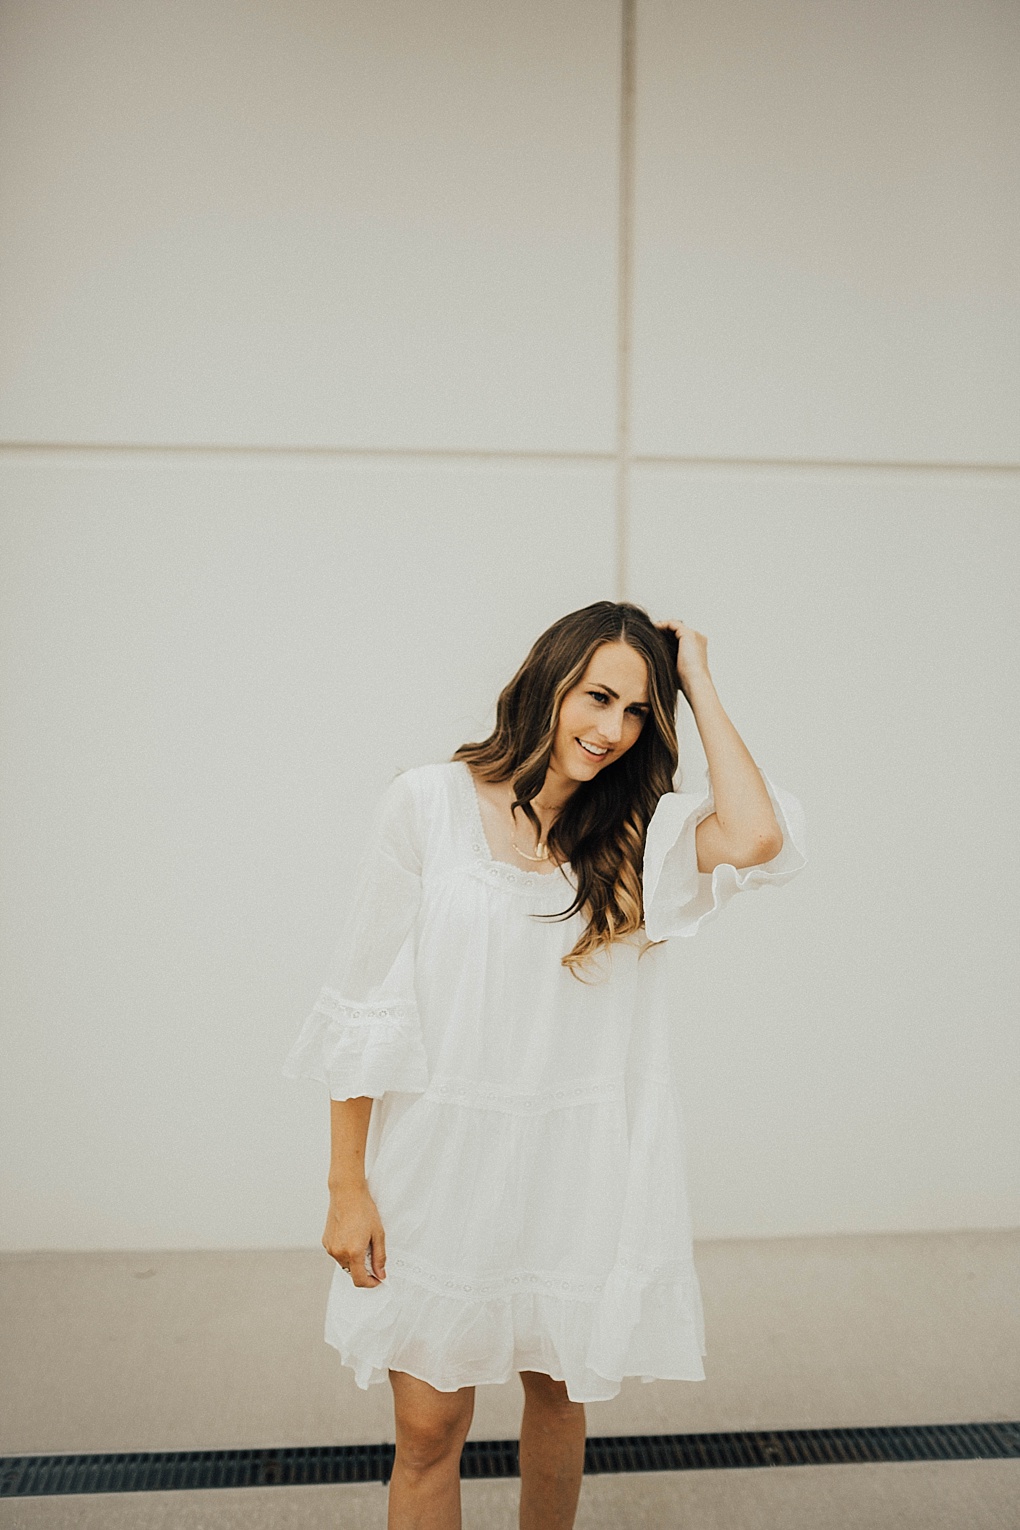 Bookmark this post ASAP! Utah Style Blogger Dani Marie shares white style staples for Summer